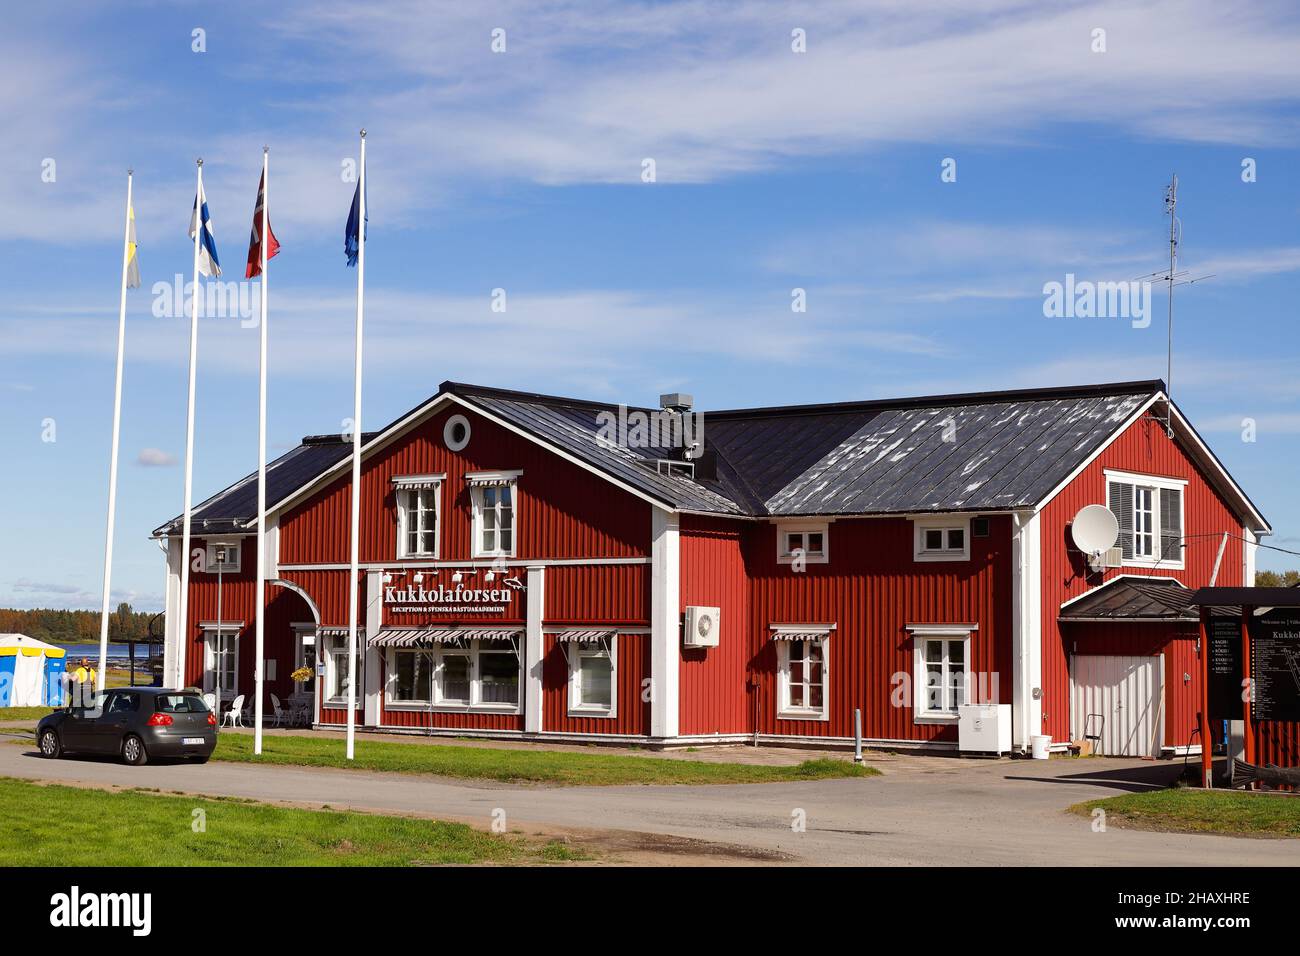 Kukkola, Sweden - August 24, 2020: The Kukkola rapids tourist and conference center main building with the sauna academy. Stock Photo